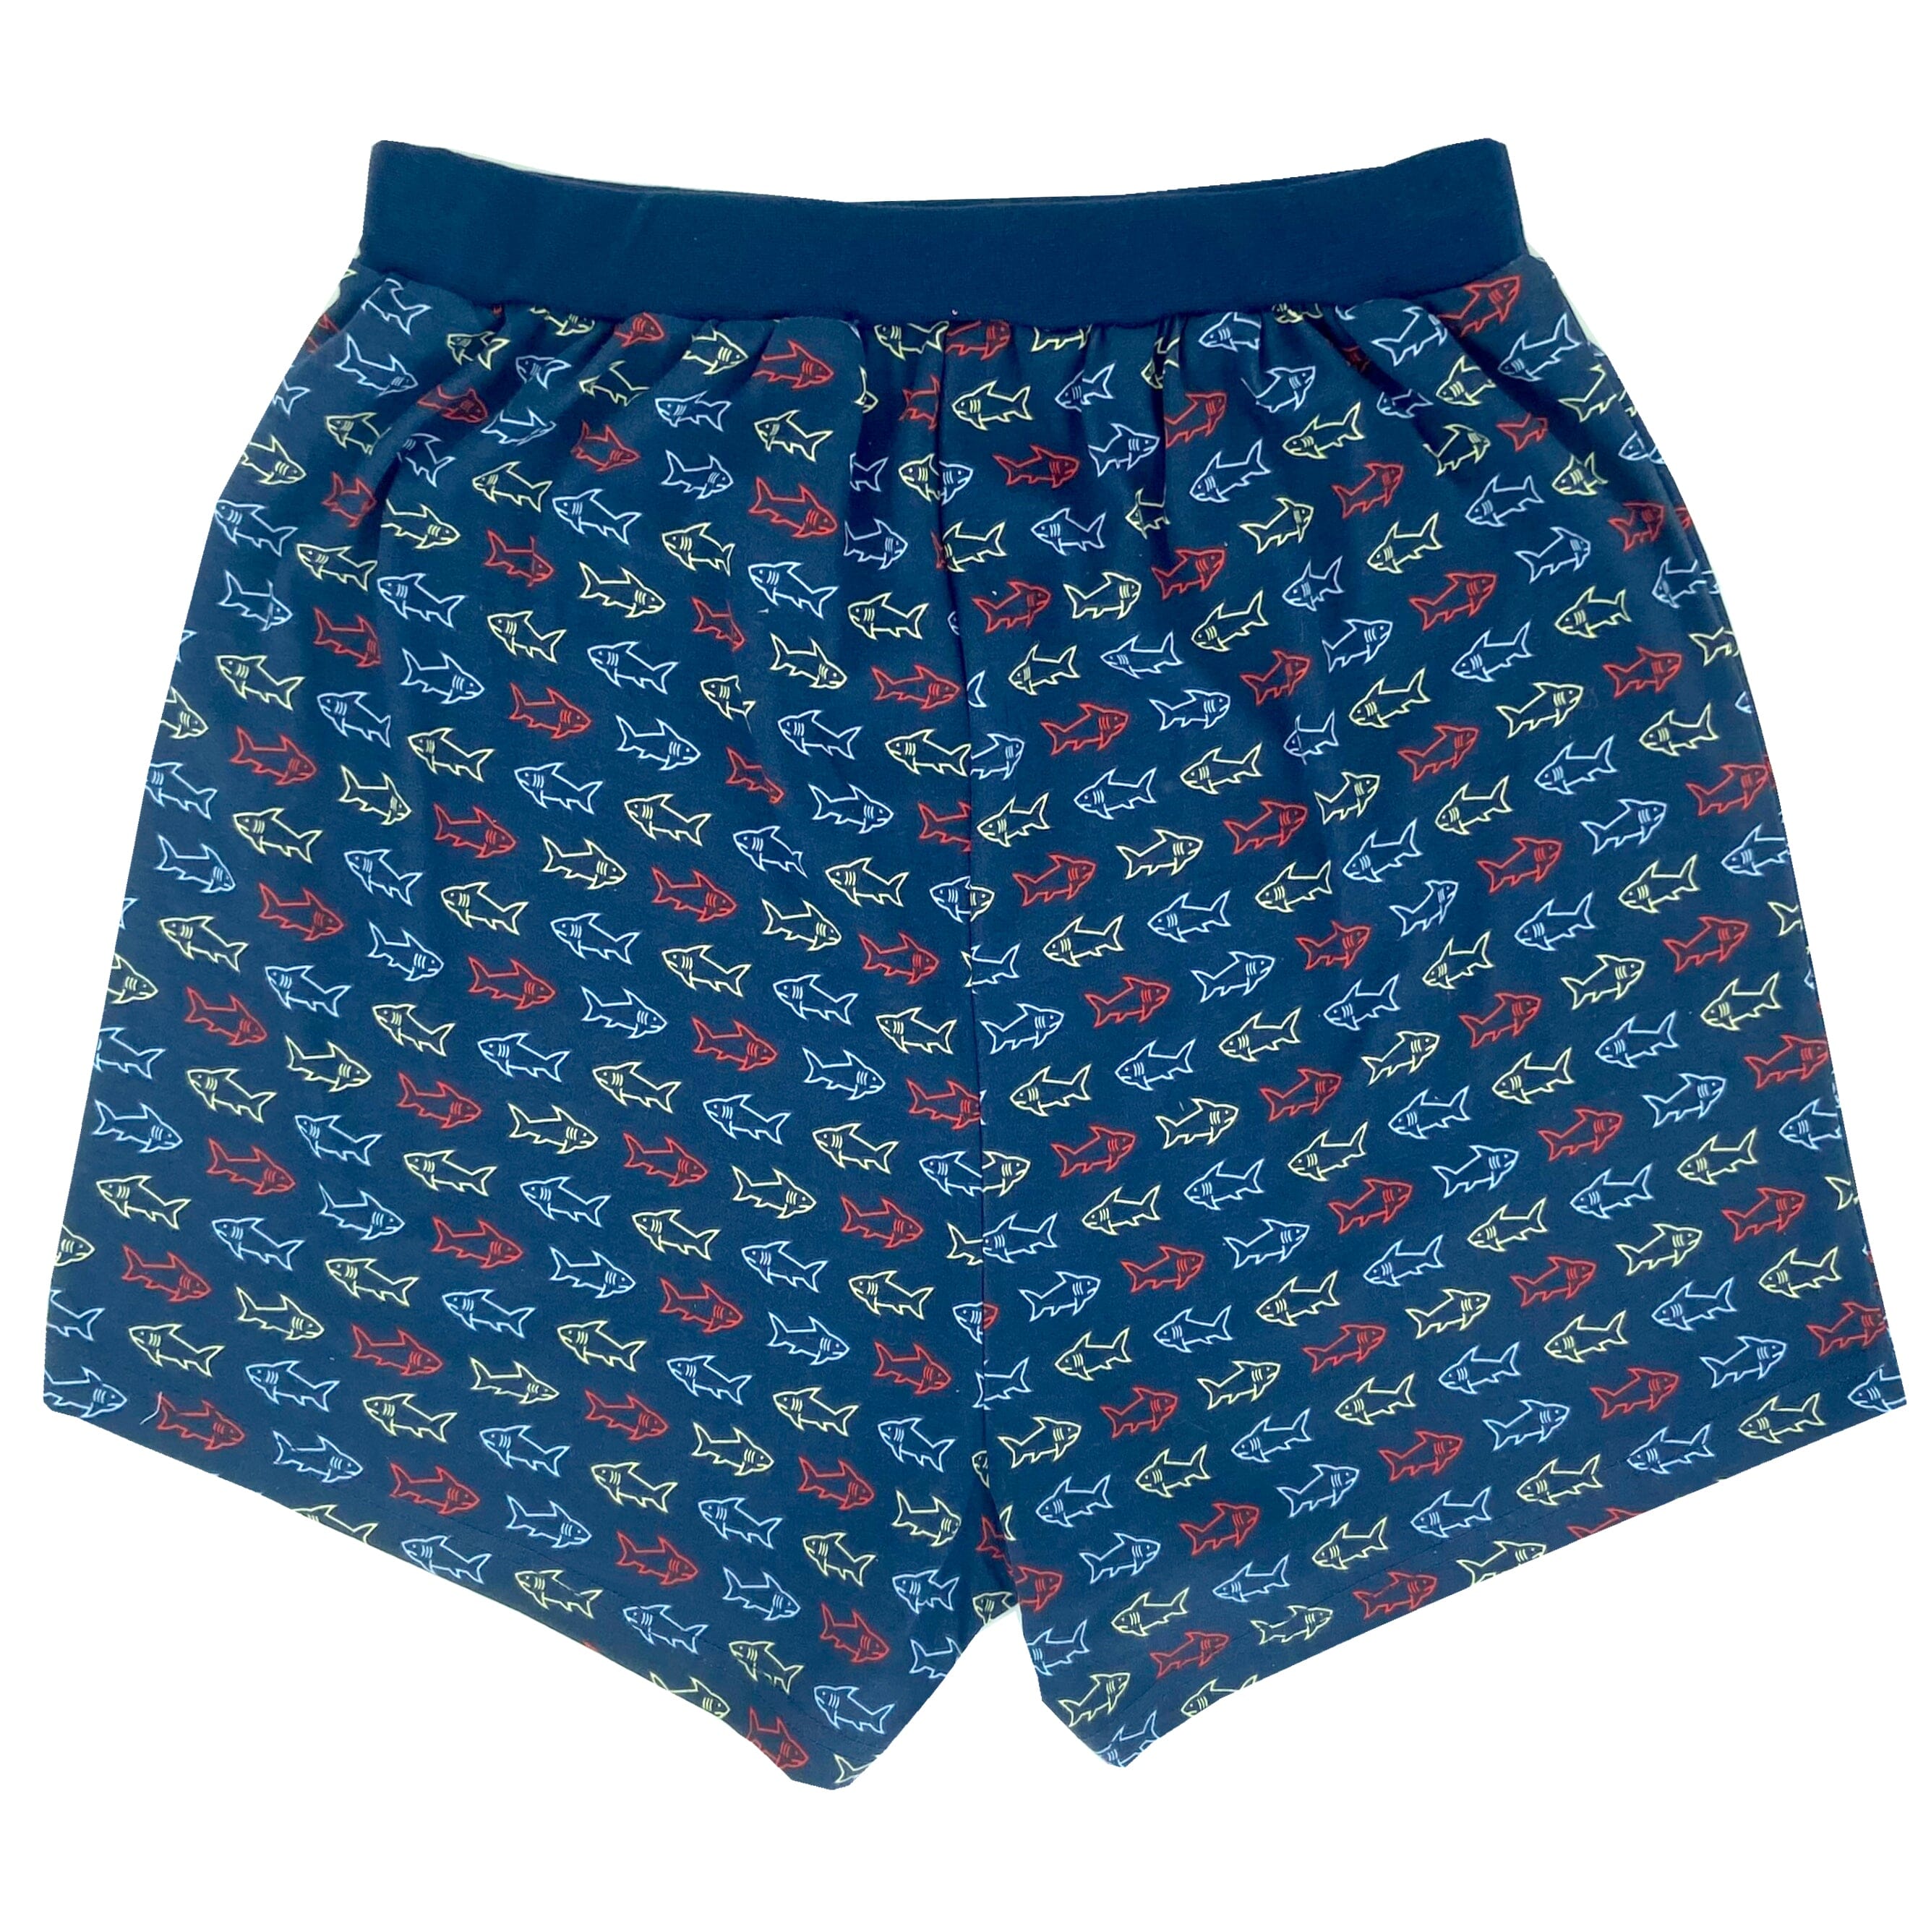 Men's Navy Blue Fish All-Over Print Cotton Knit Pajama PJ Sleep Shorts